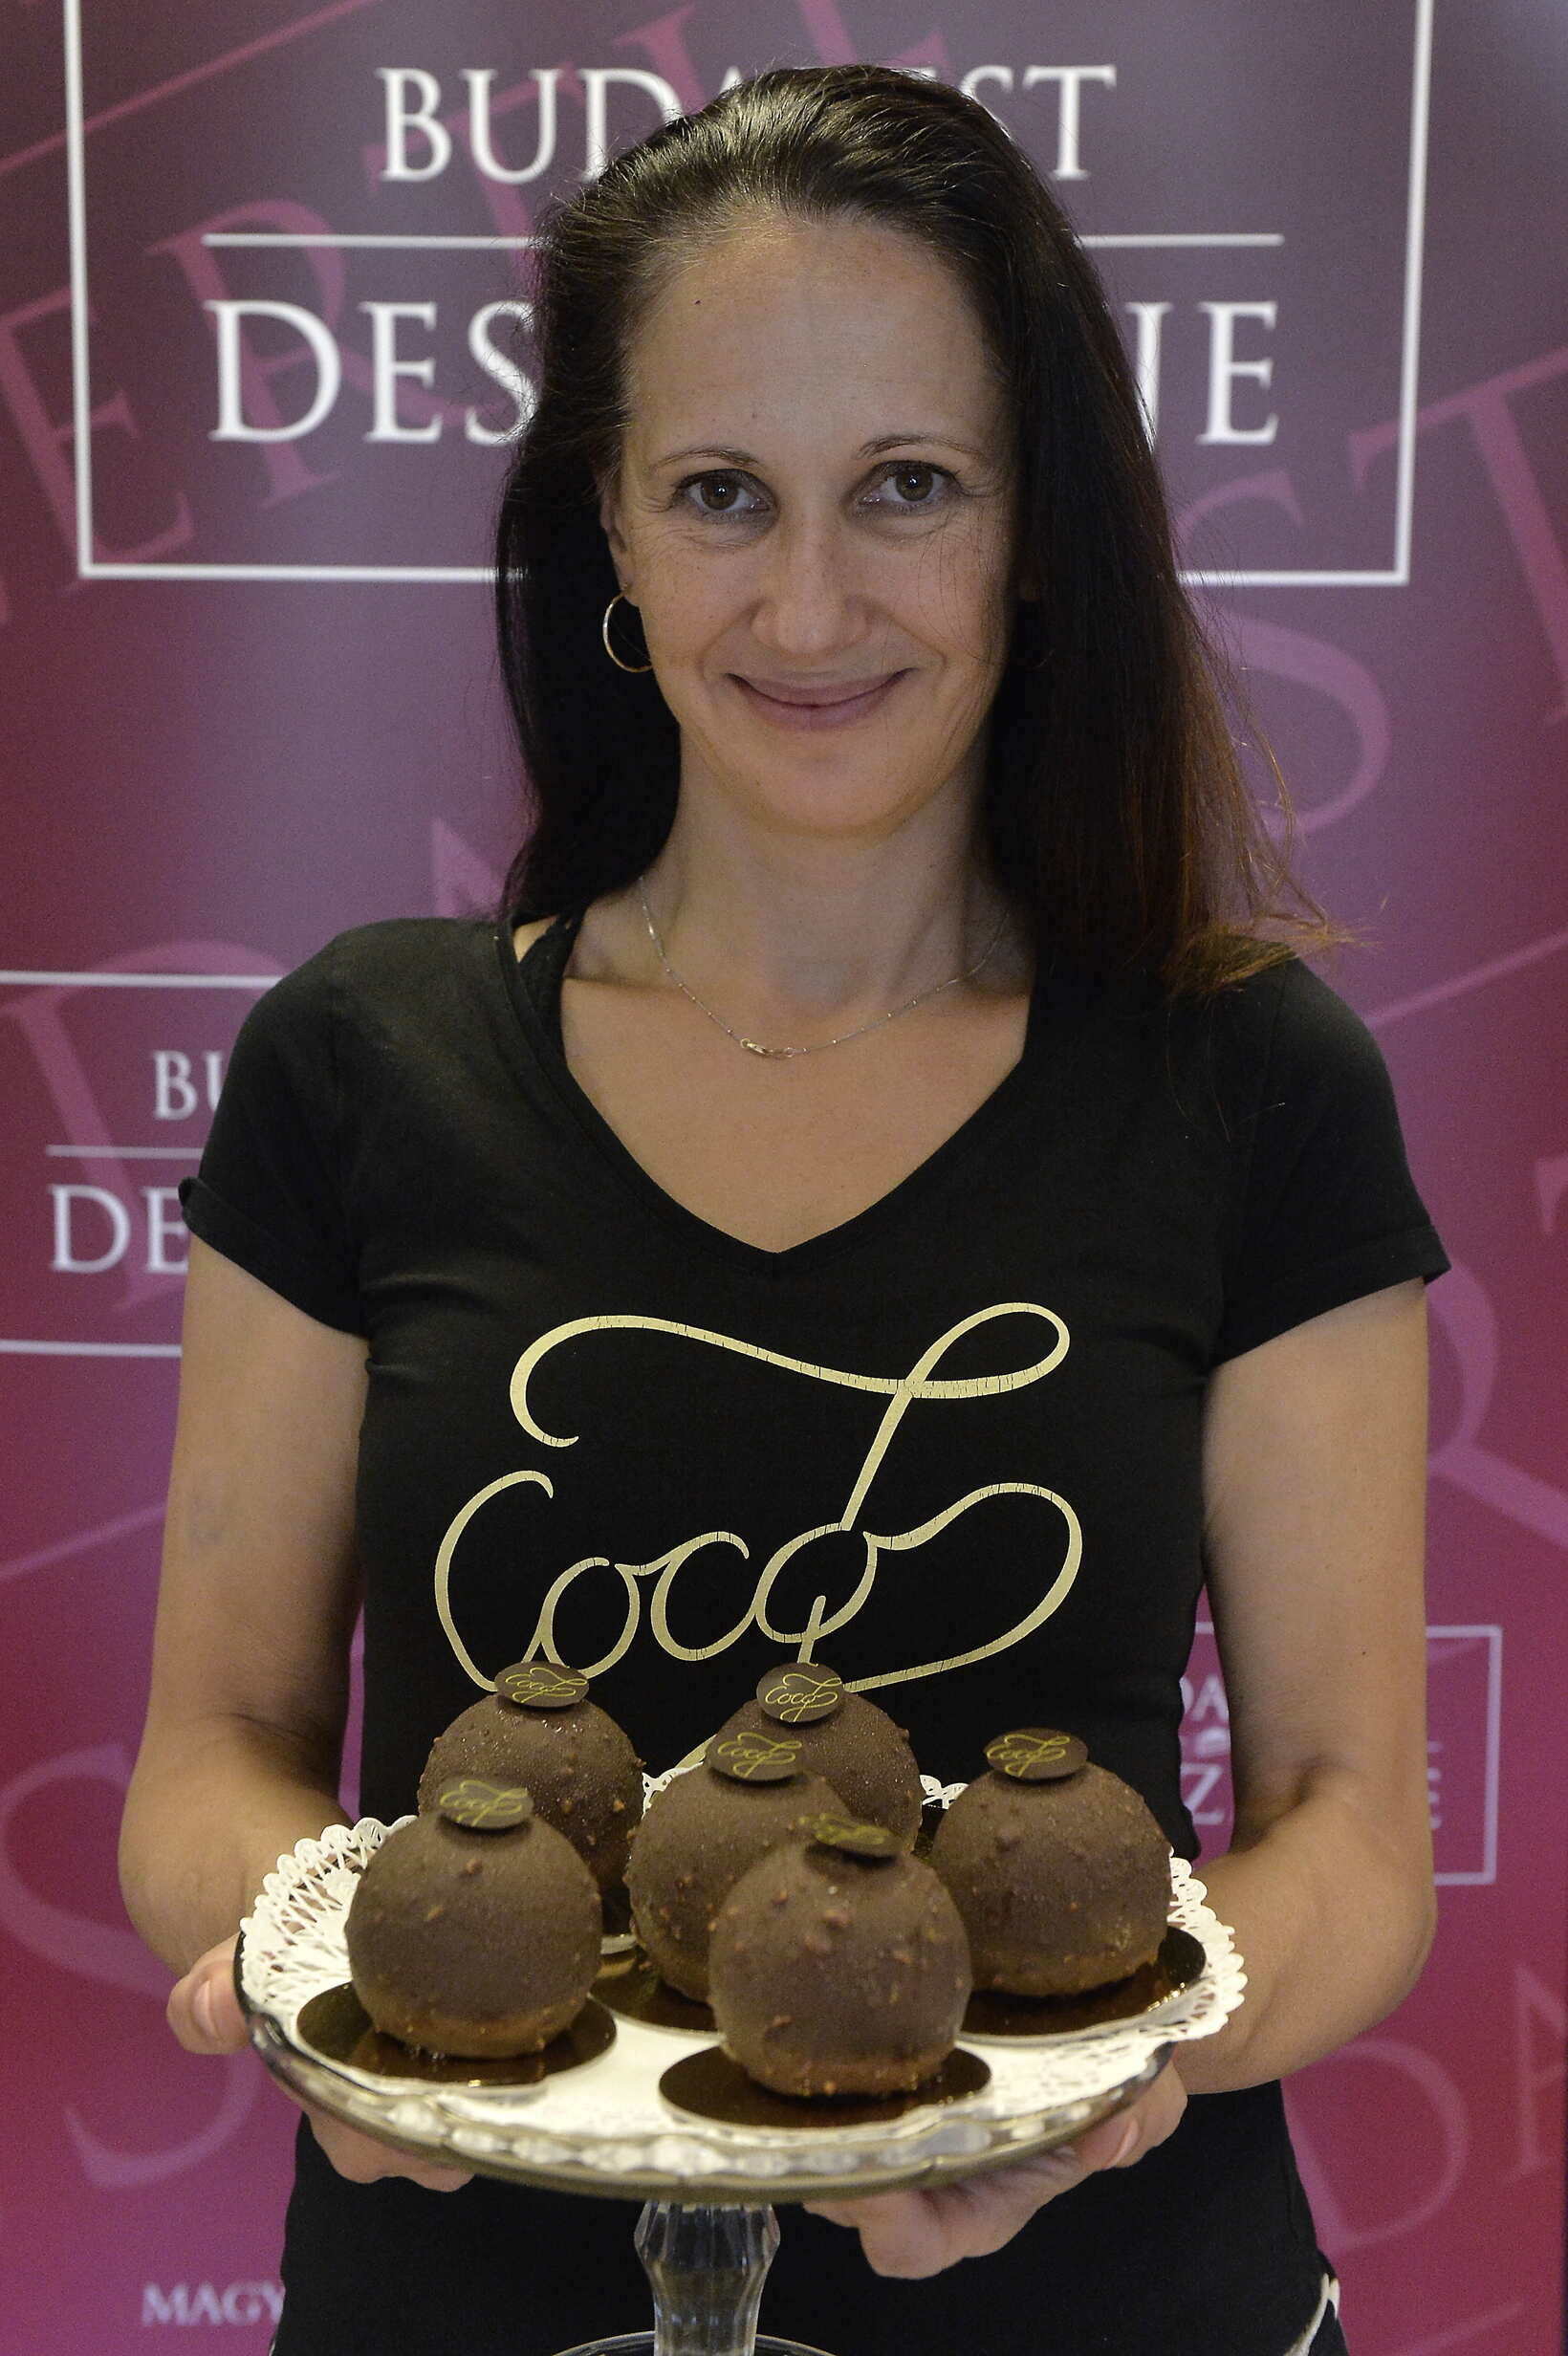 Dessert-of-Budapest-Coco7-Chocolate-Shop-cake-food